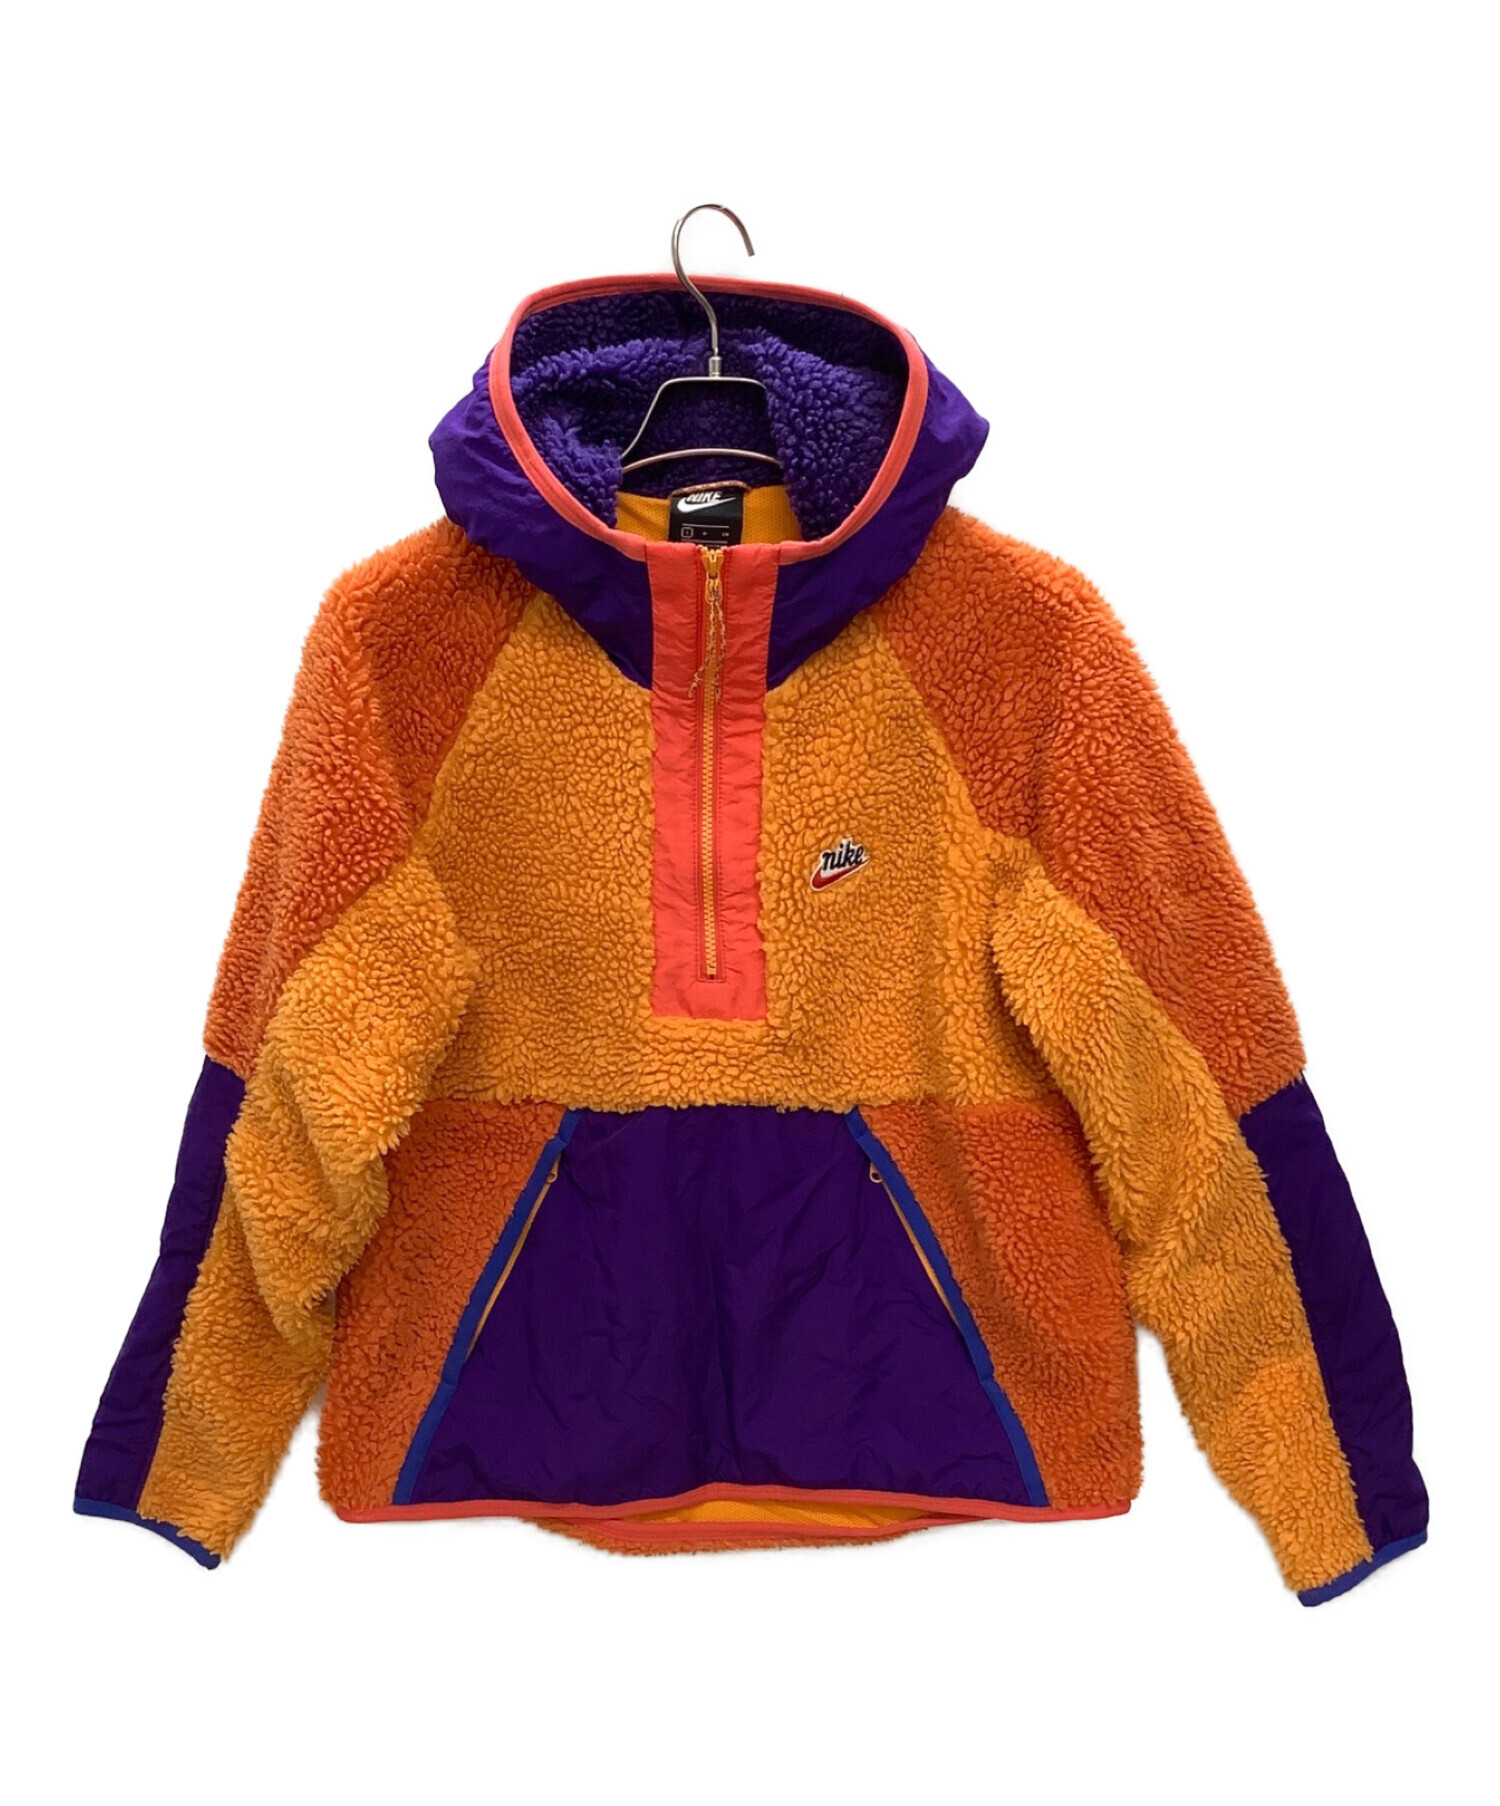 NIKE (ナイキ) フリースジャケット オレンジ×パープル サイズ:S